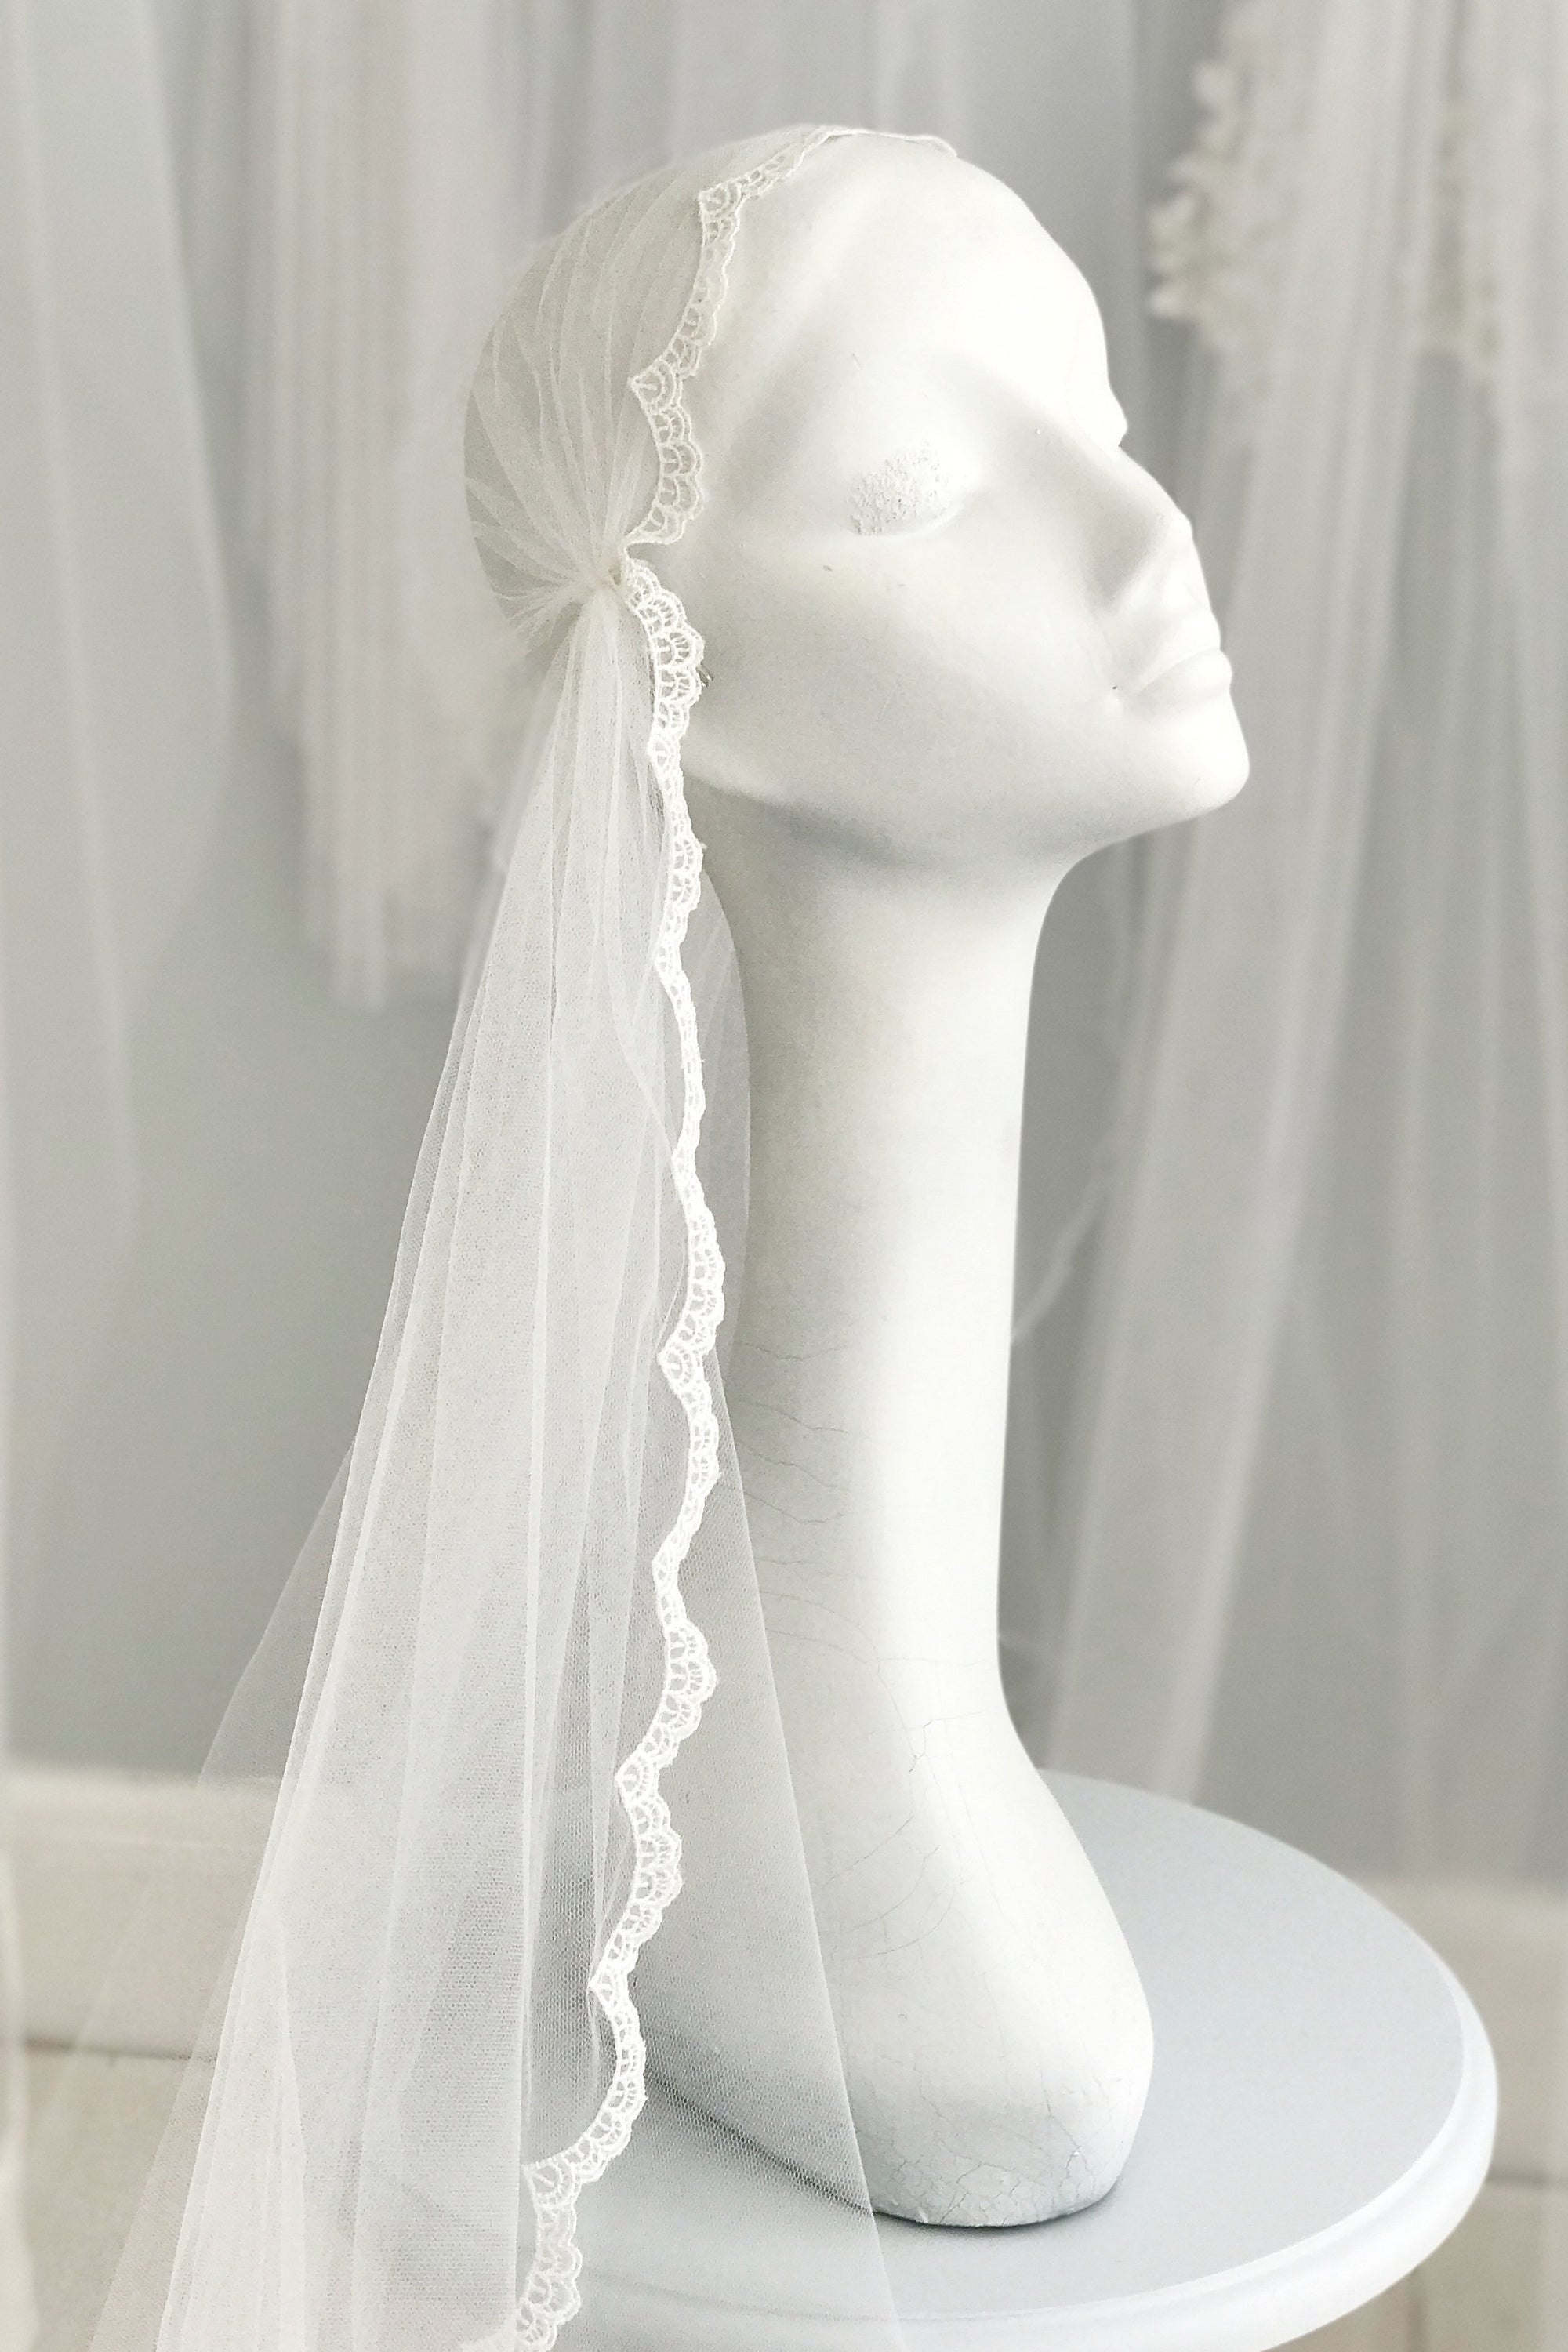 Lace edge juliet cap wedding veil - Edna